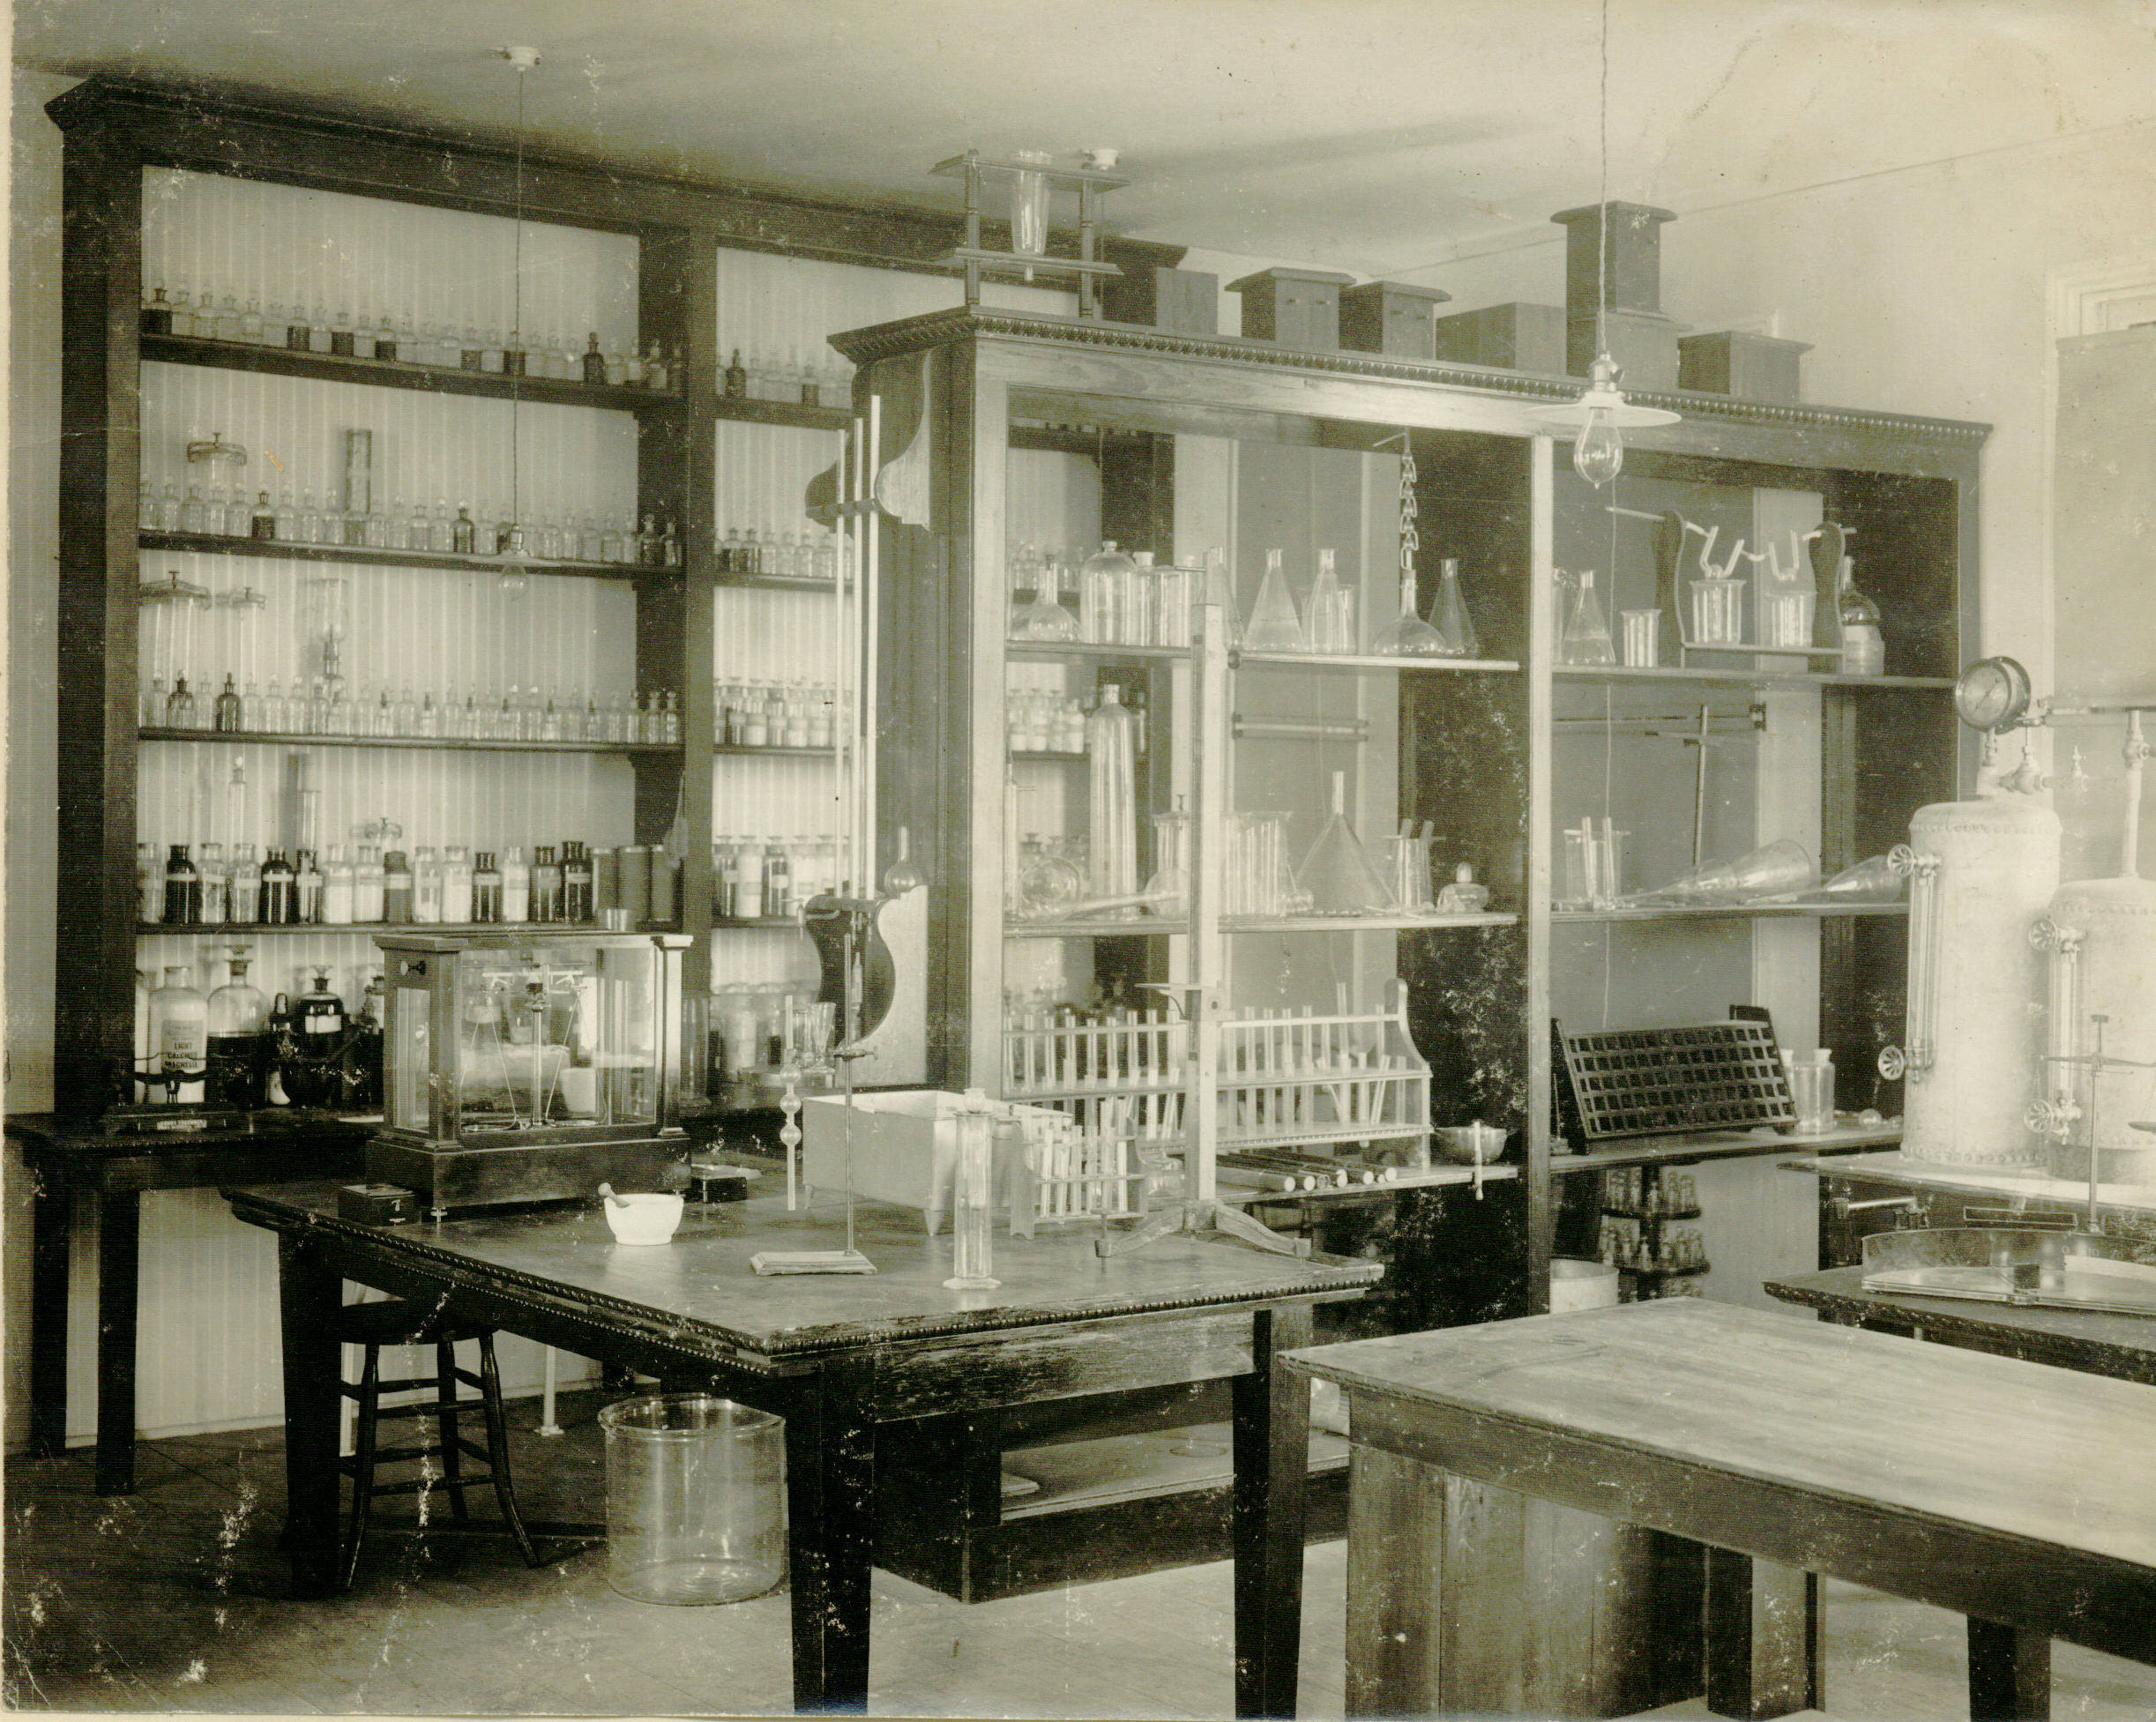 Old Laboratory